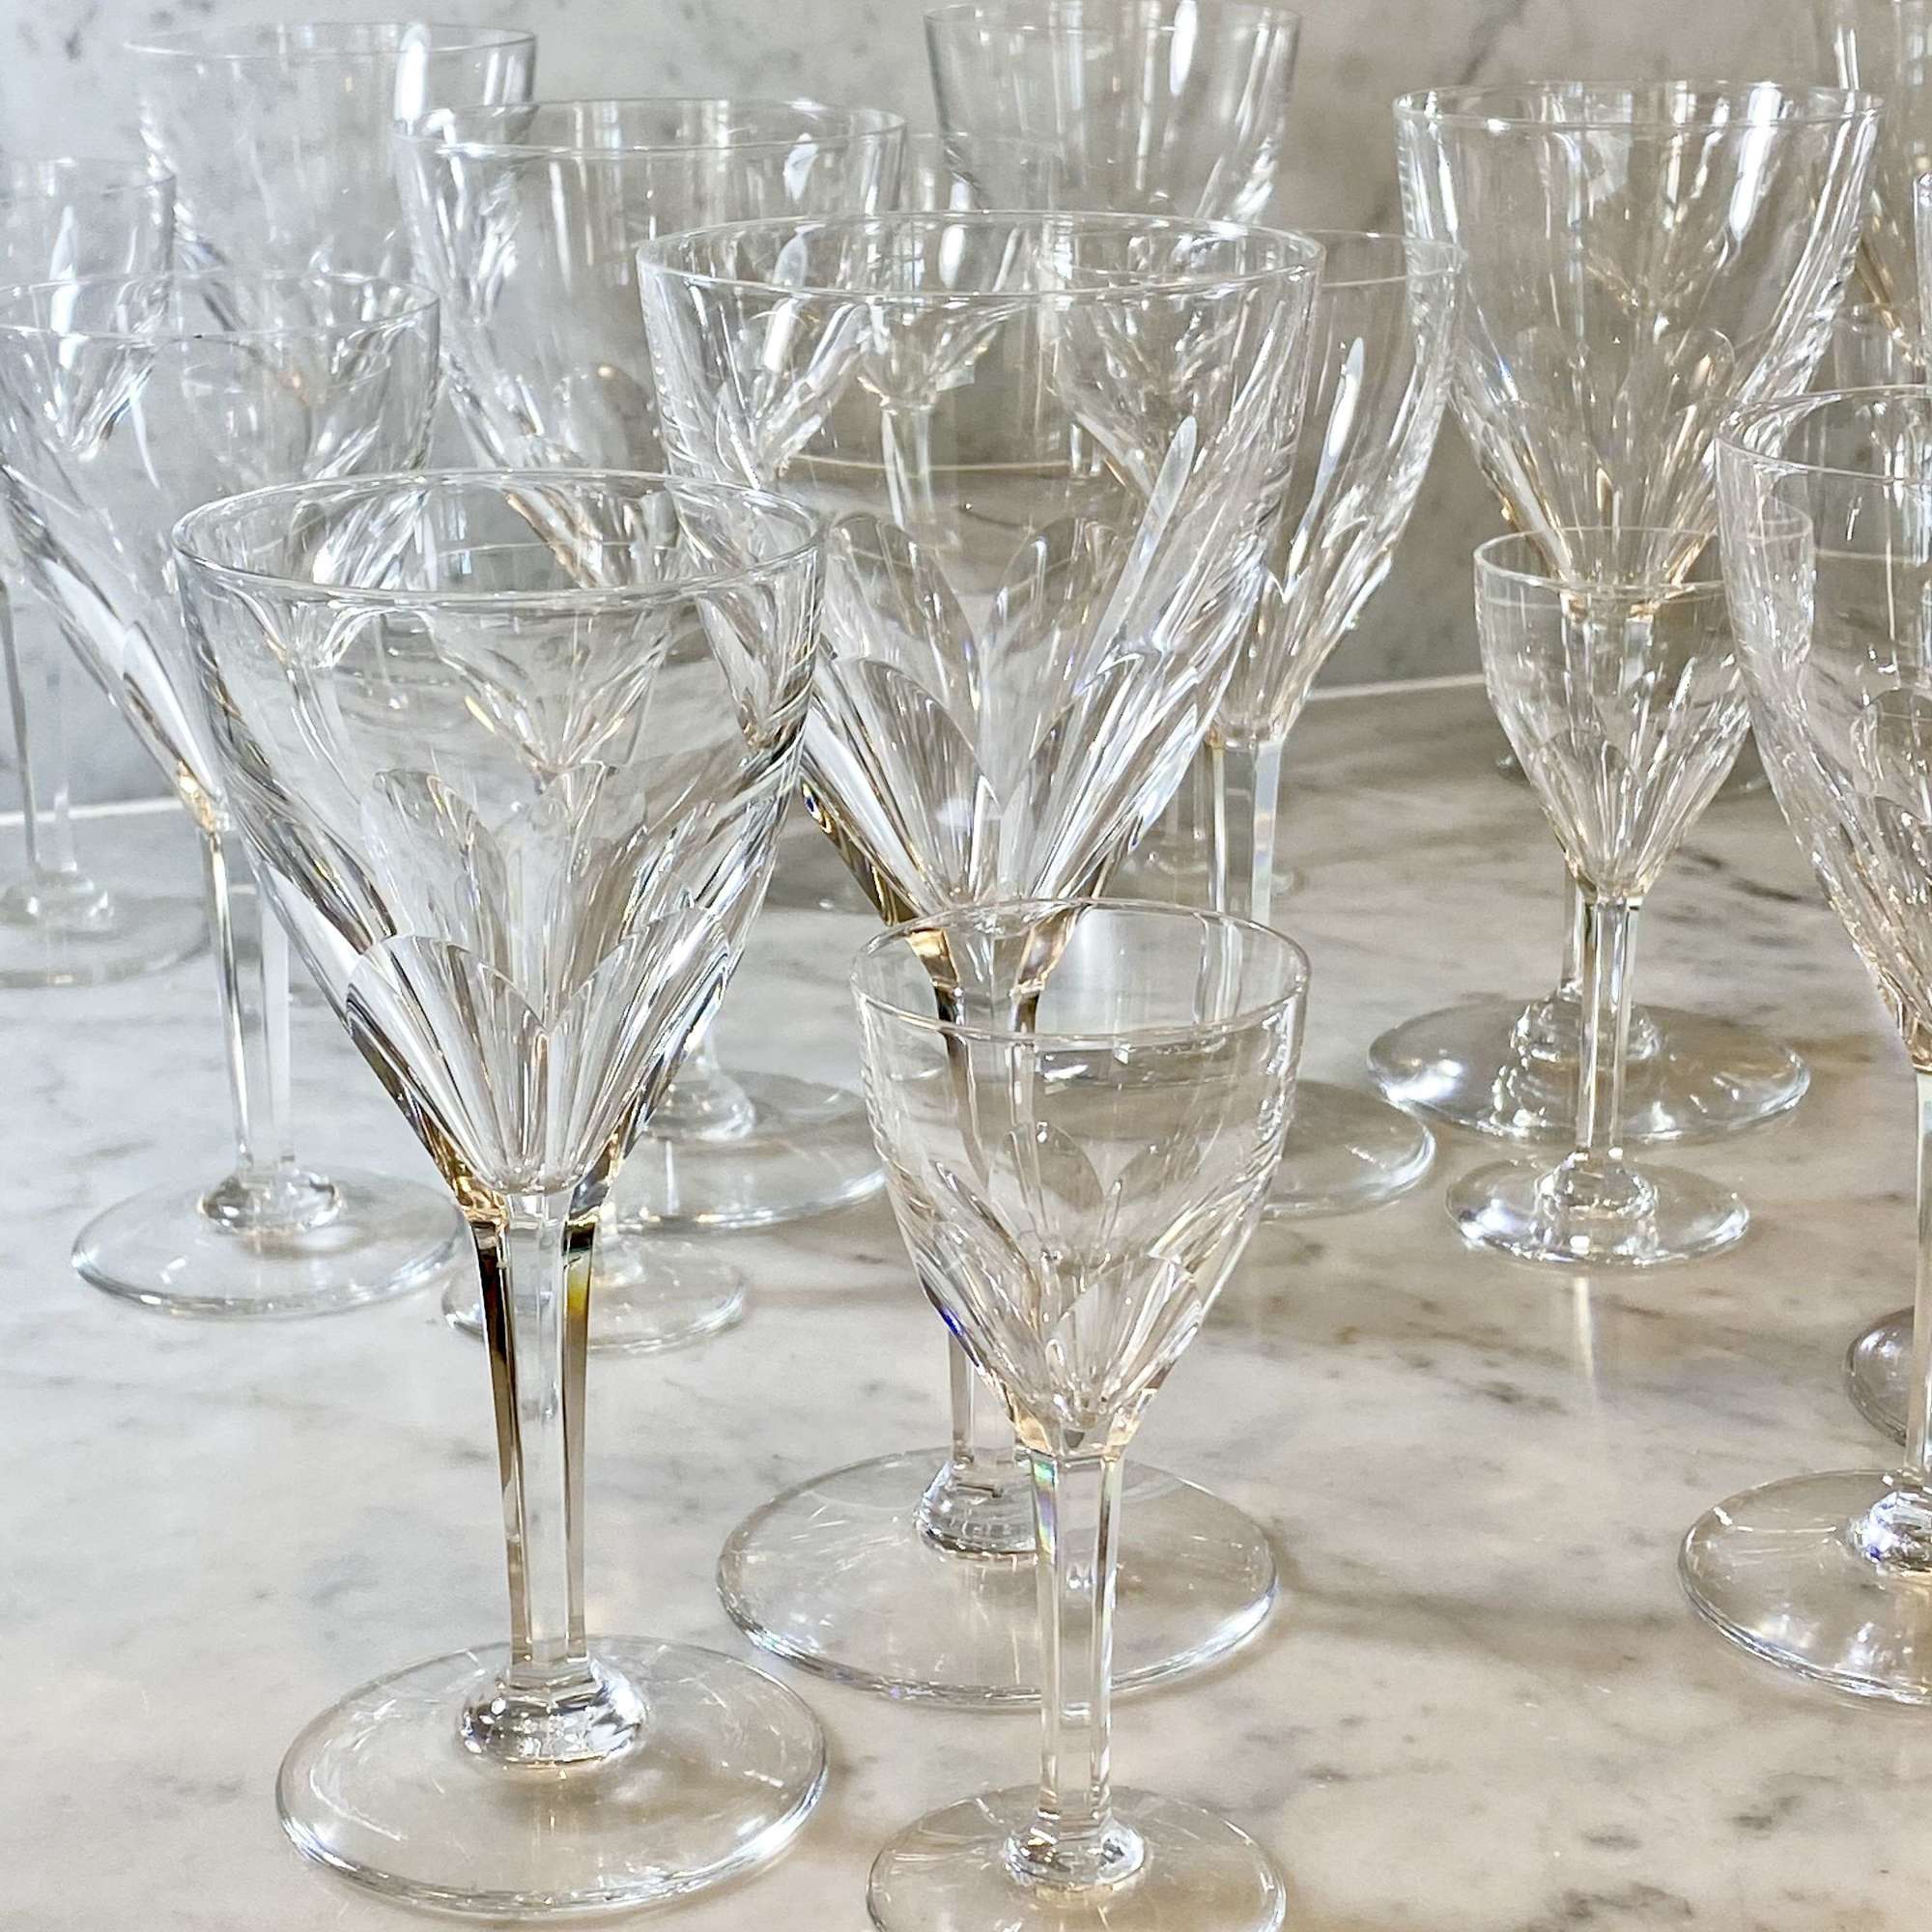 Suite of 36 Val Saint Lambert finest crystal wine glasses